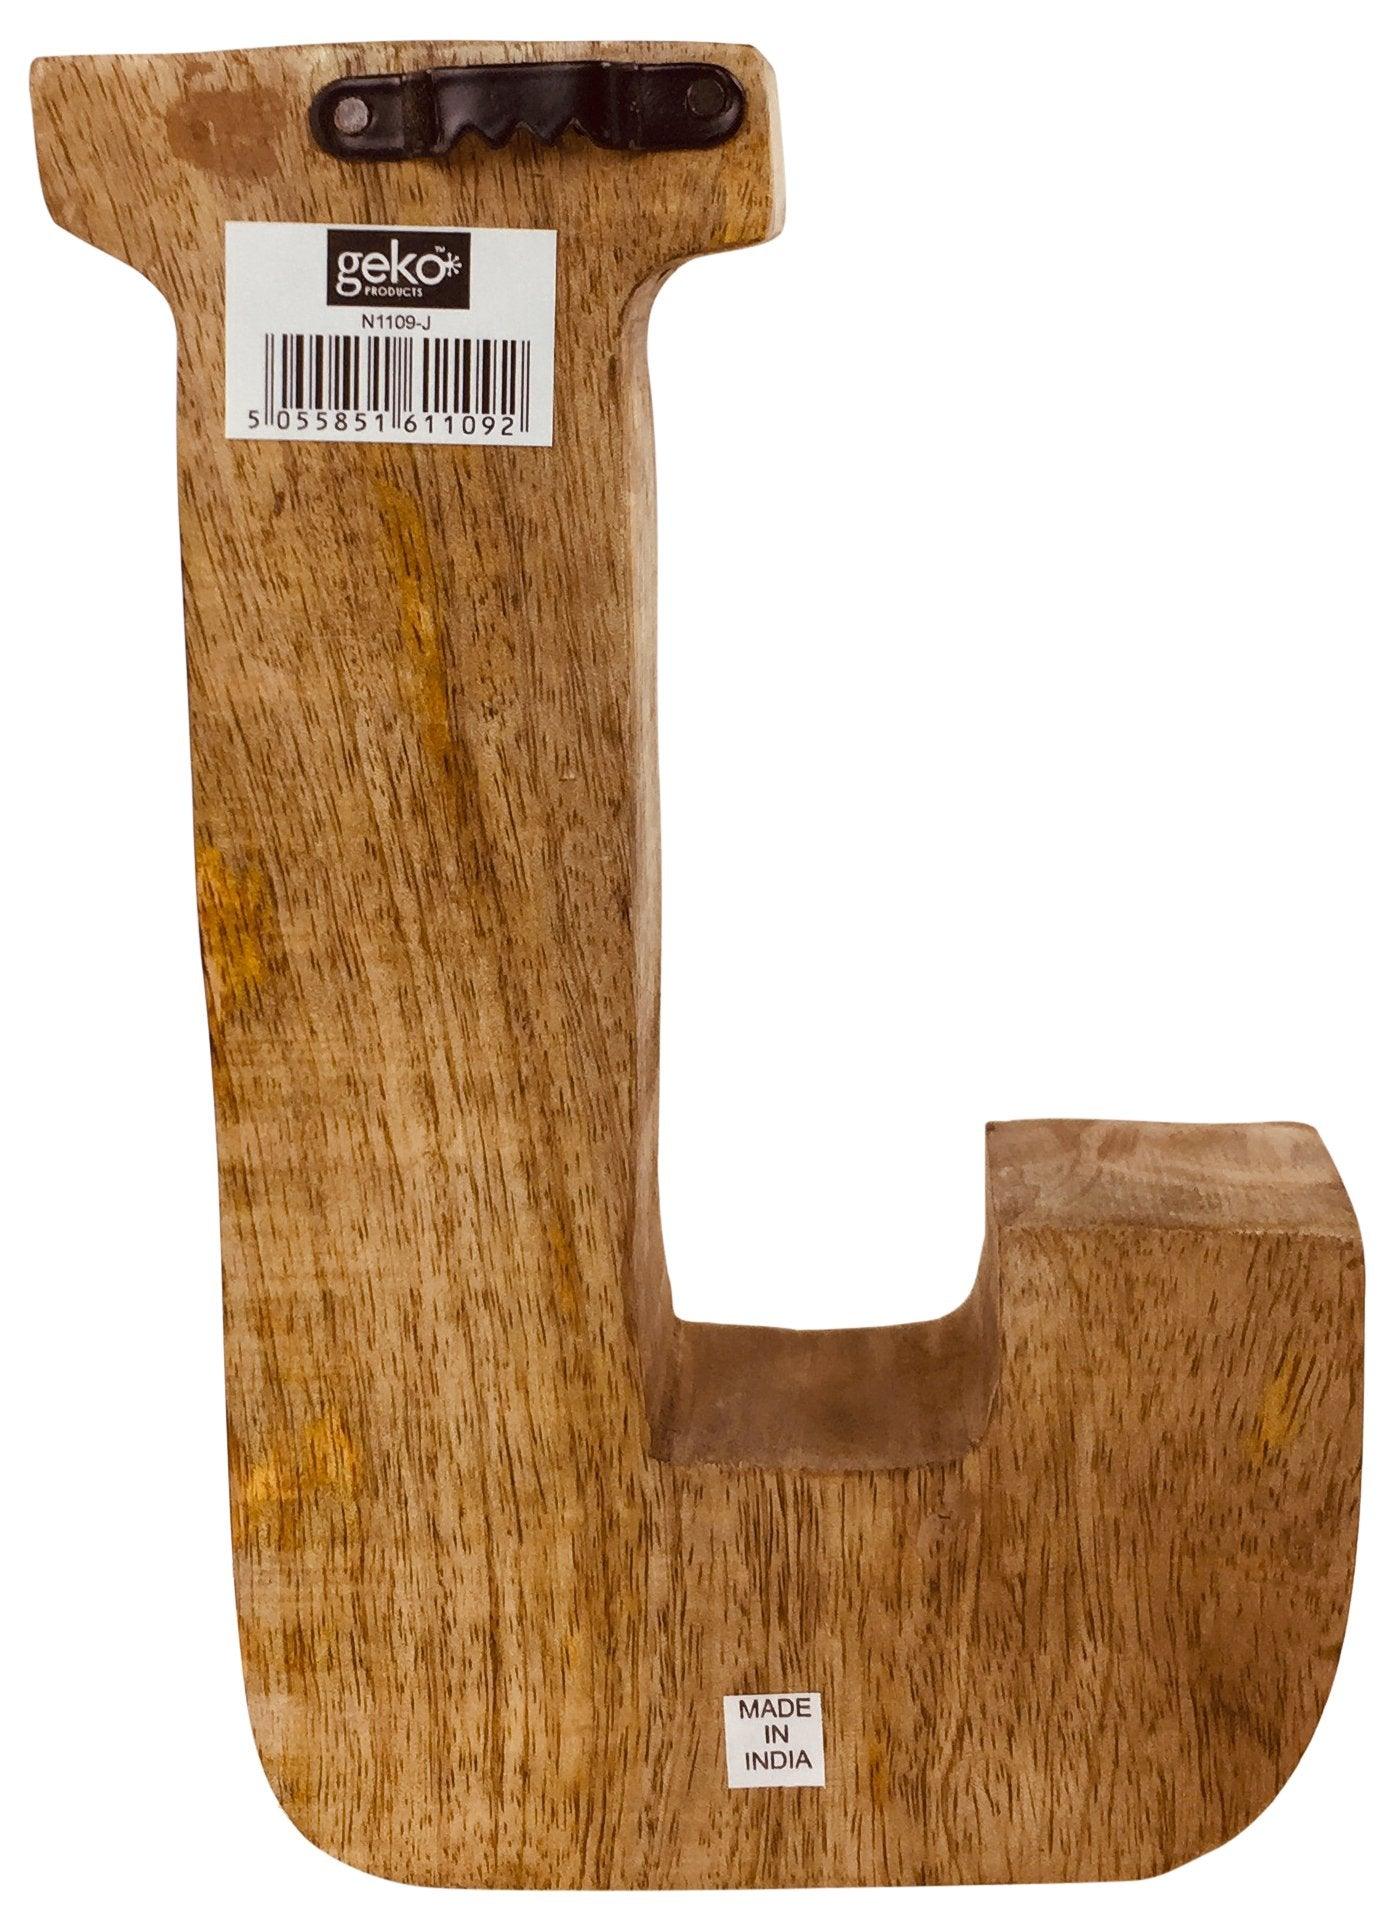 Hand Carved Wooden Embossed Letter J-Single Letters